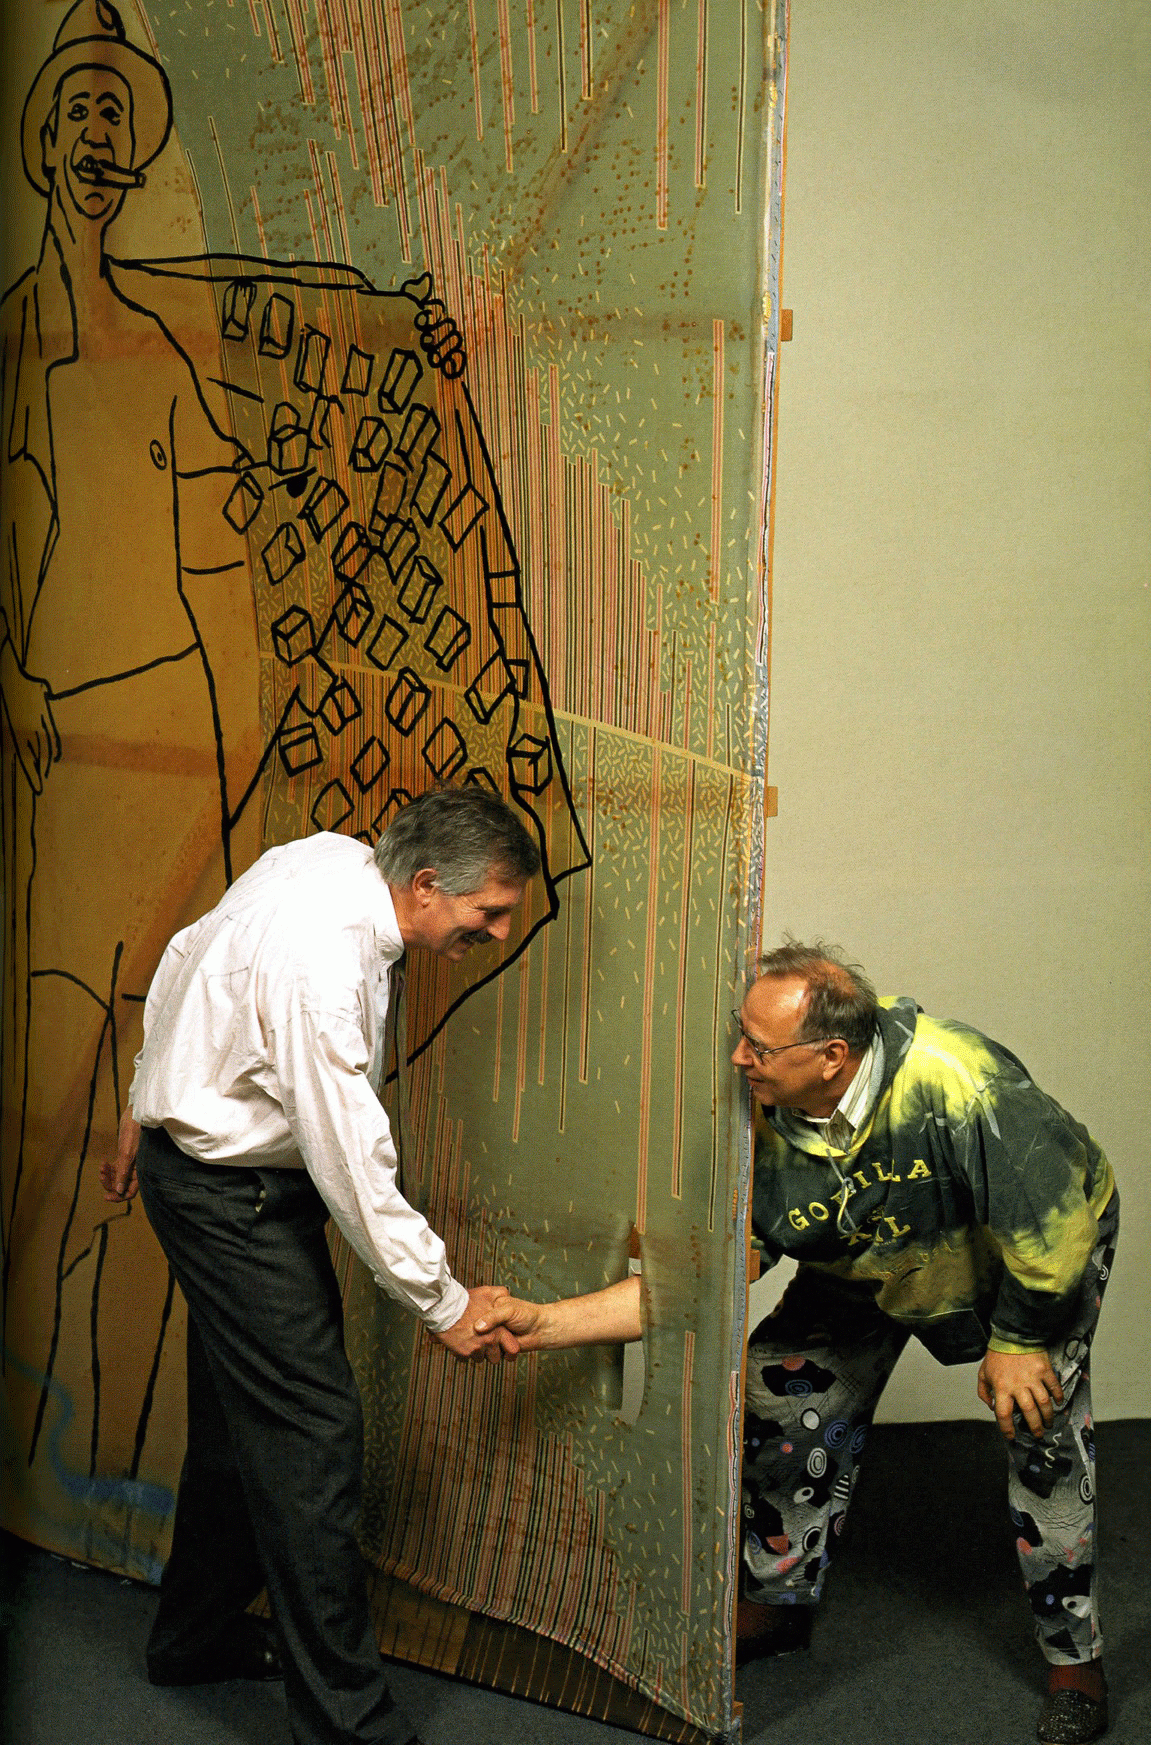 Rainer Speck and Sigmar Polke shaking hands through Gangster (1988),&nbsp;as illustrated in
Sigmar Polke. Works &amp; Days (Cologne: DuMont Verlag, 2005).